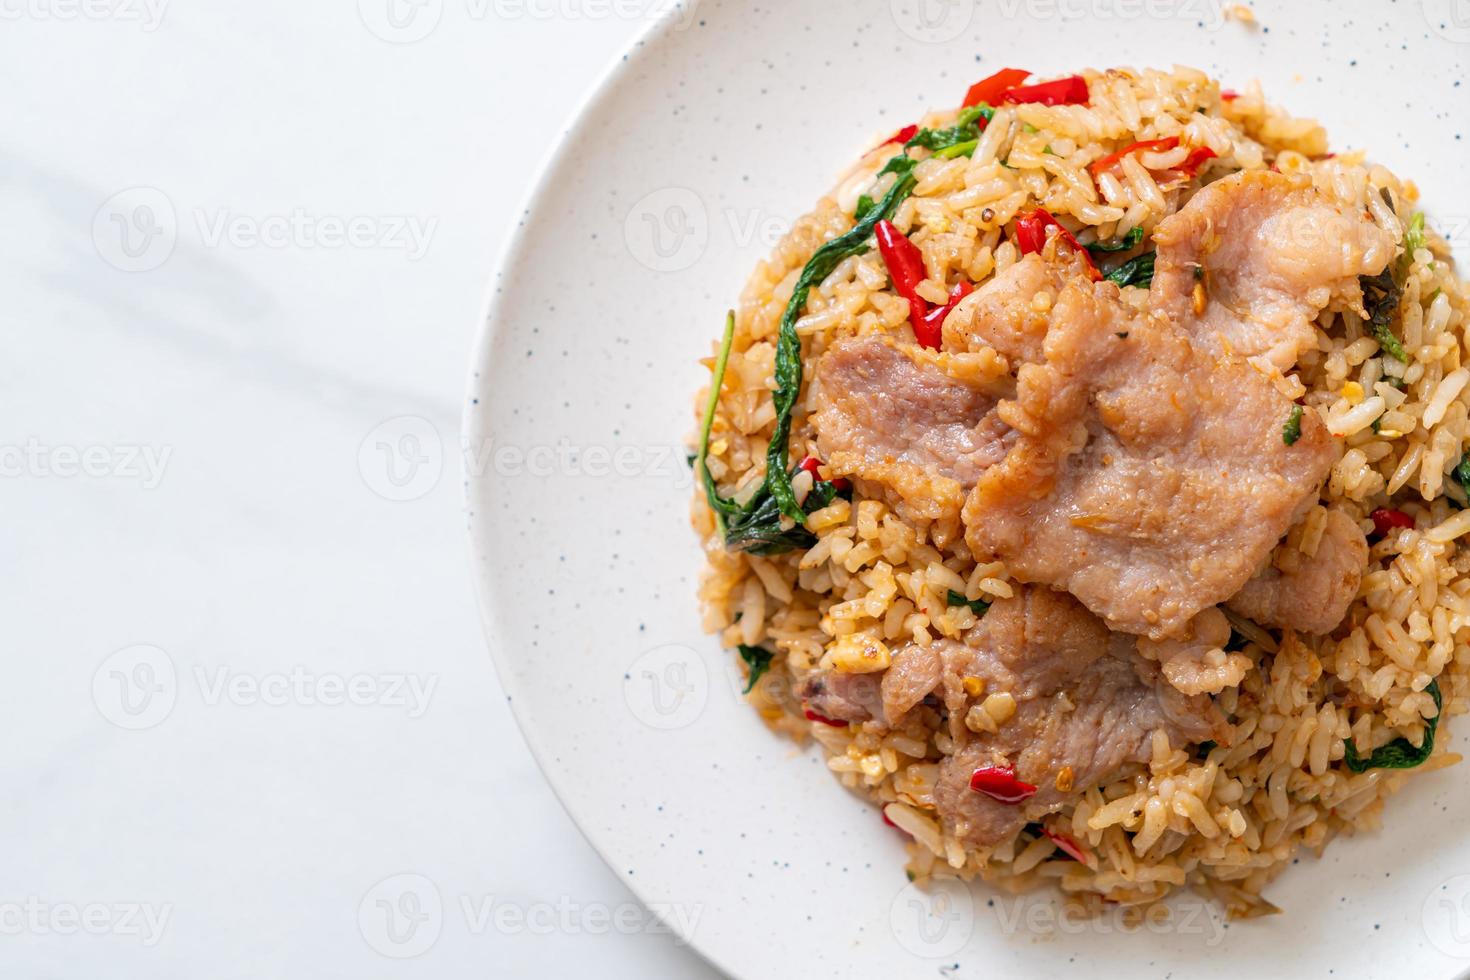 Fried rice with Thai basil and pork - Thai food style photo